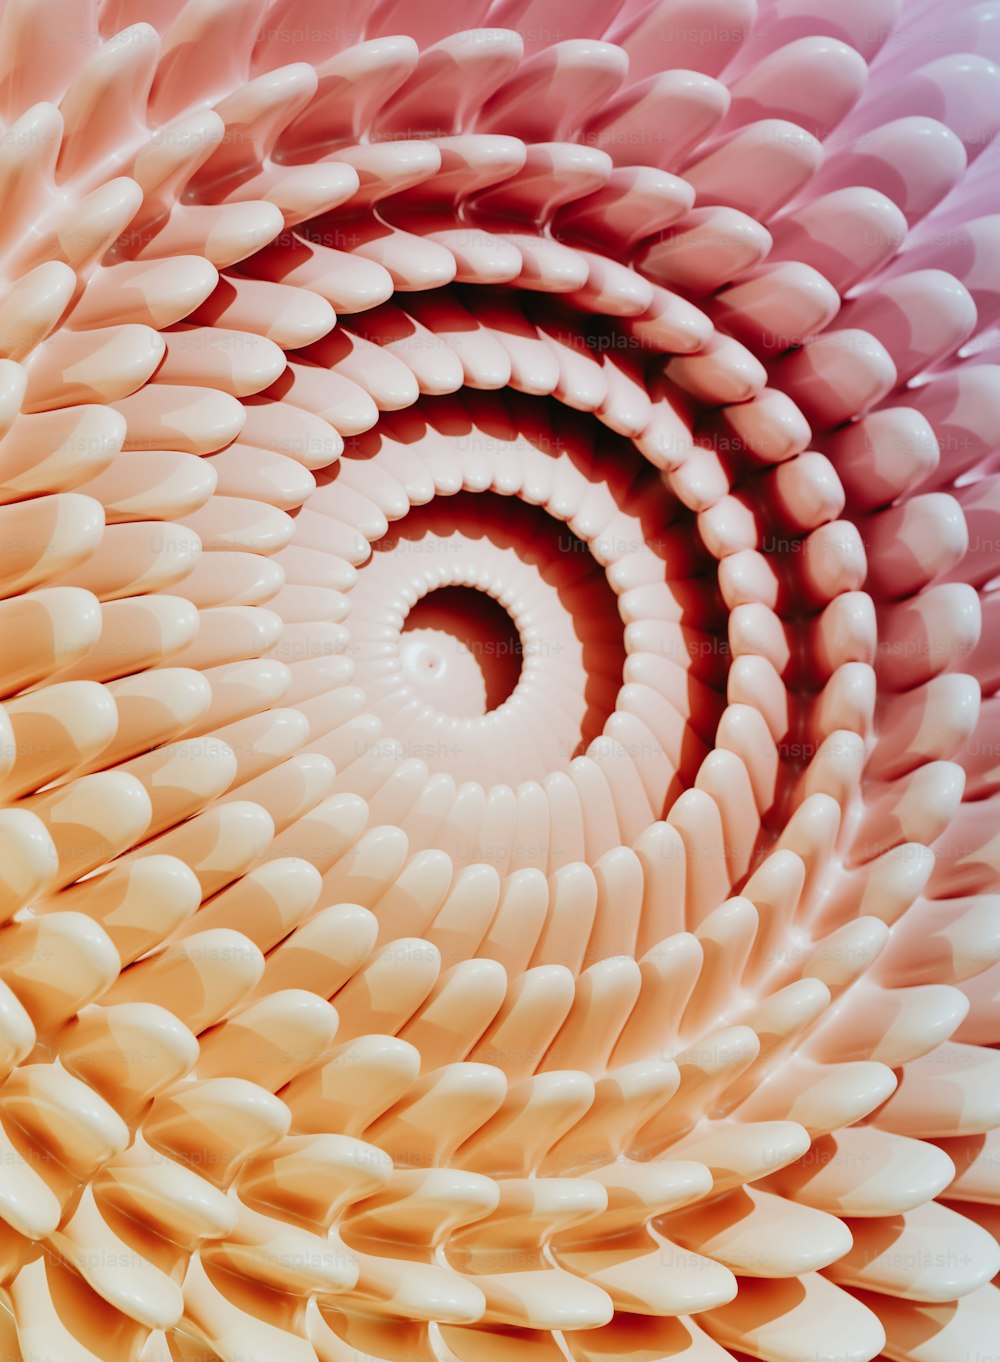 a close up of a flower with a spiral design